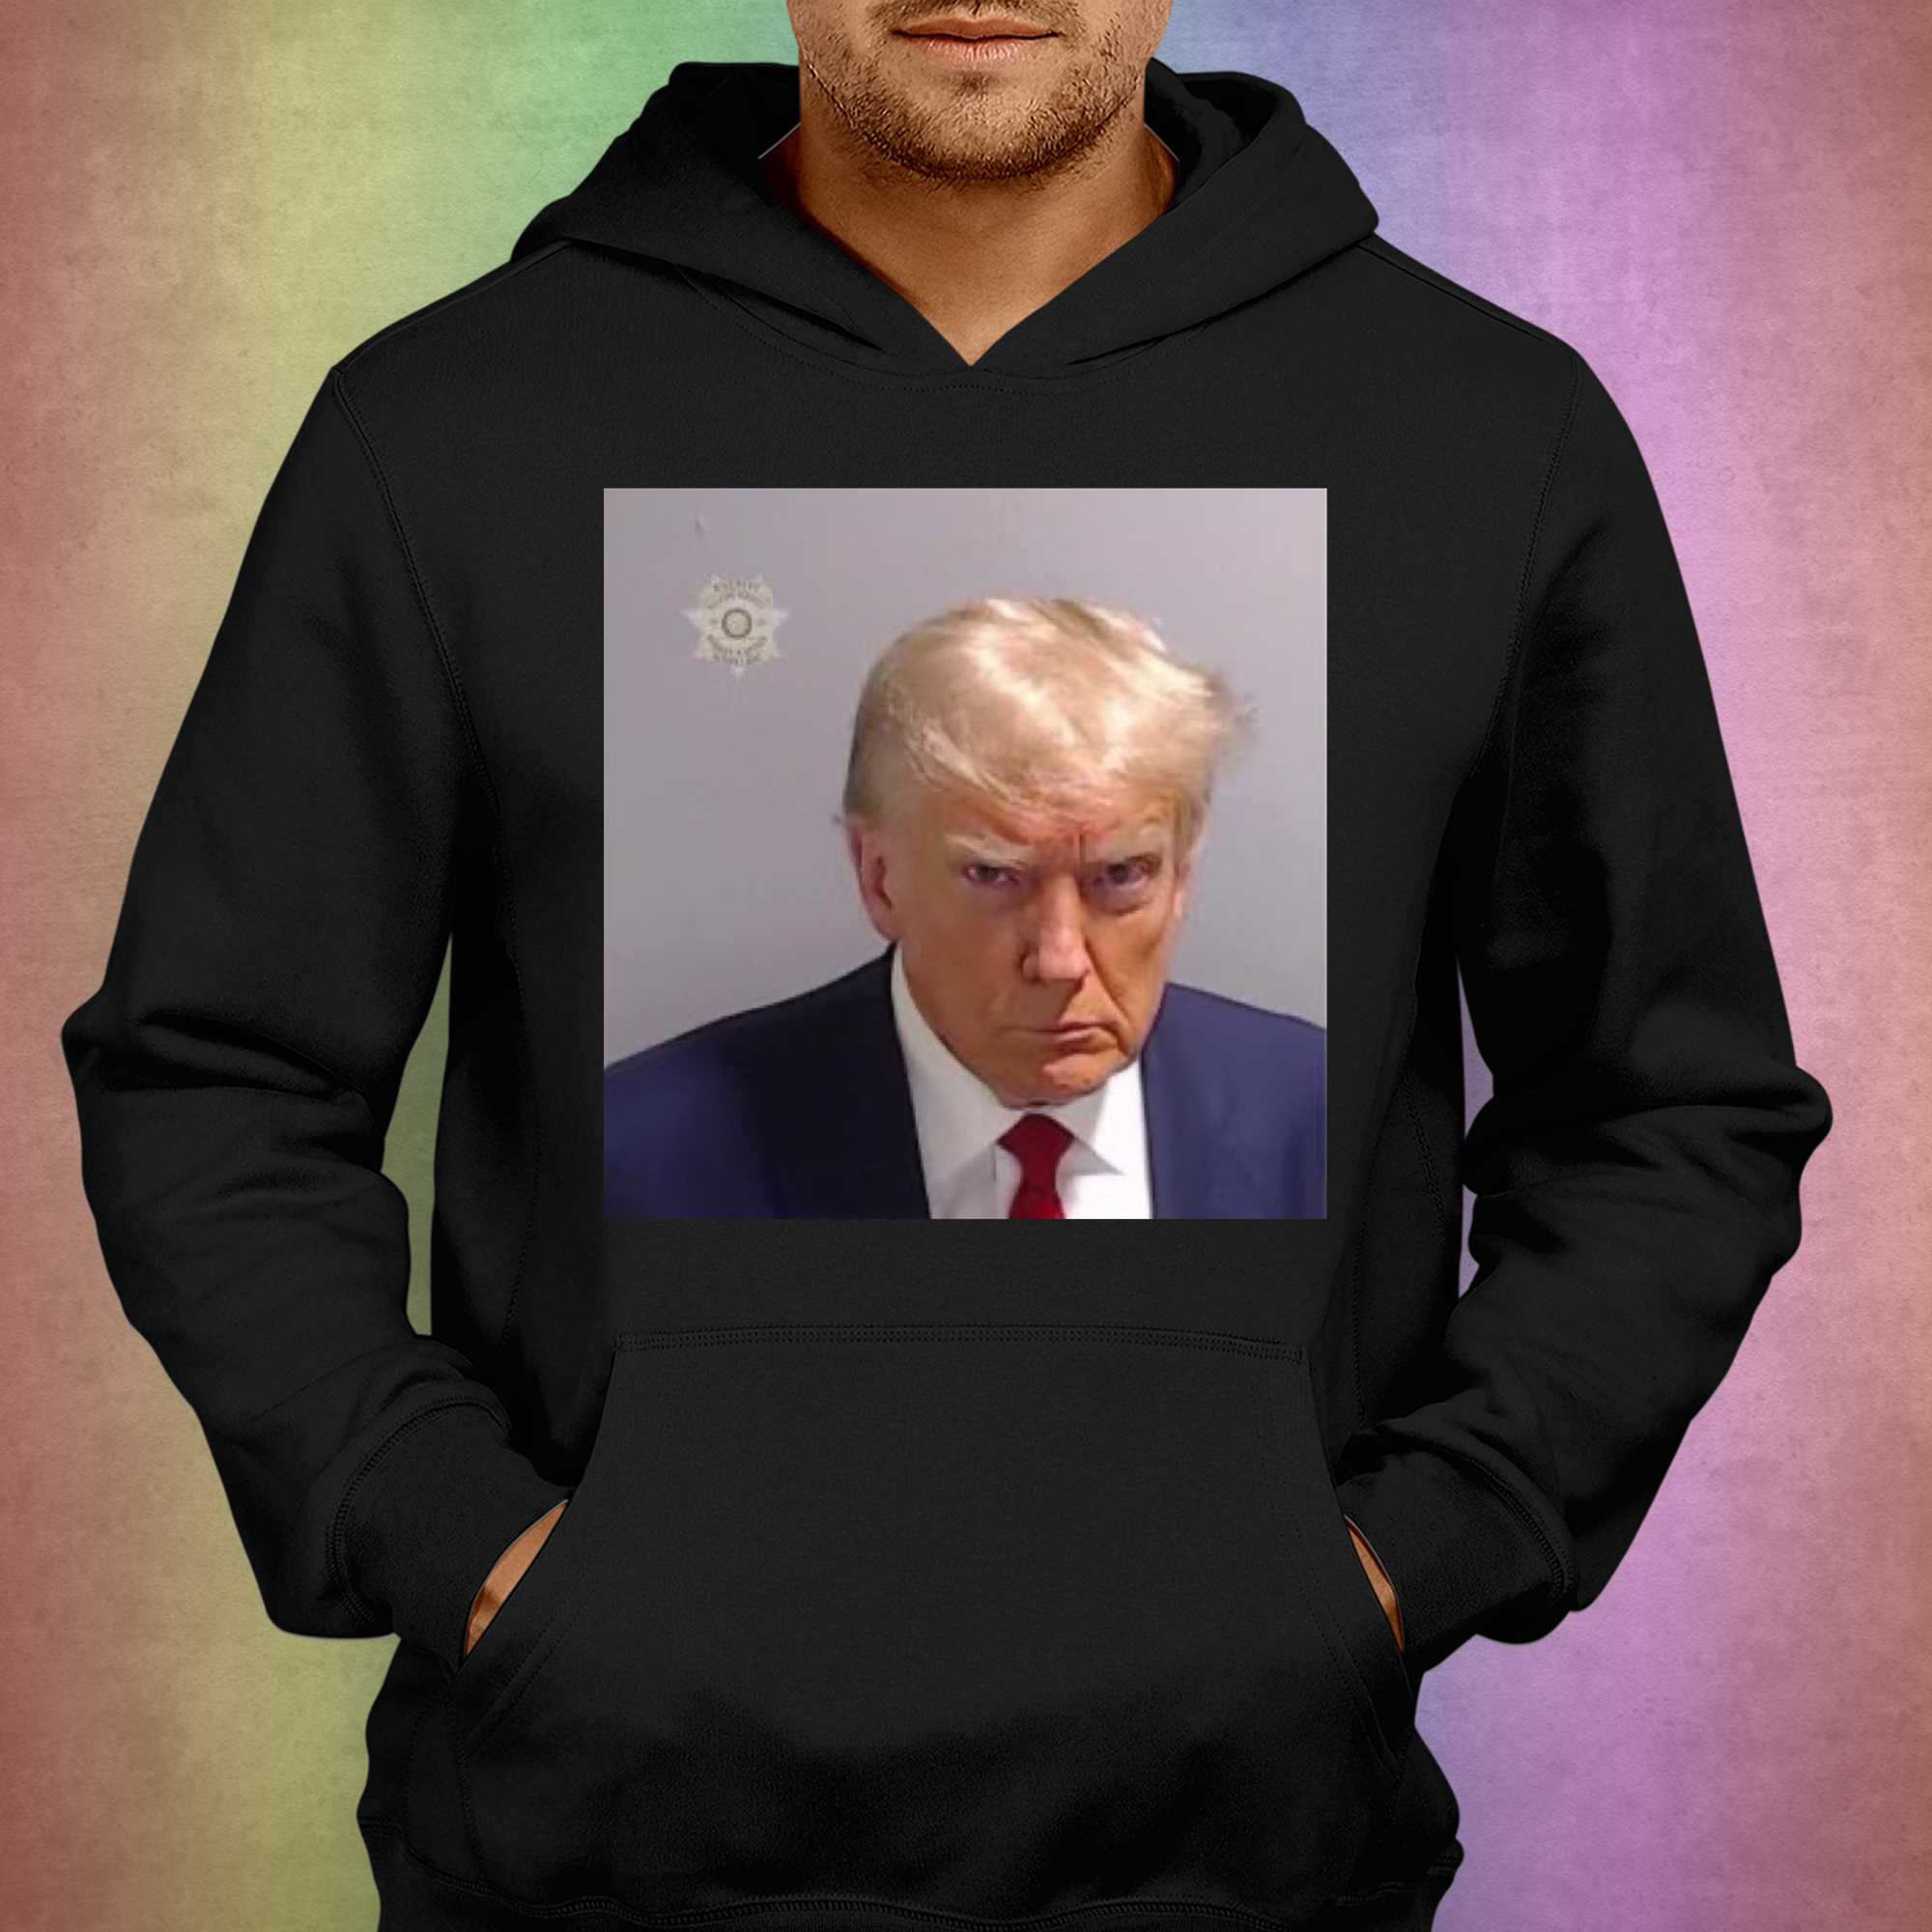 Official Trump Mug Shot Released 25-8 T-shirt - Shibtee Clothing